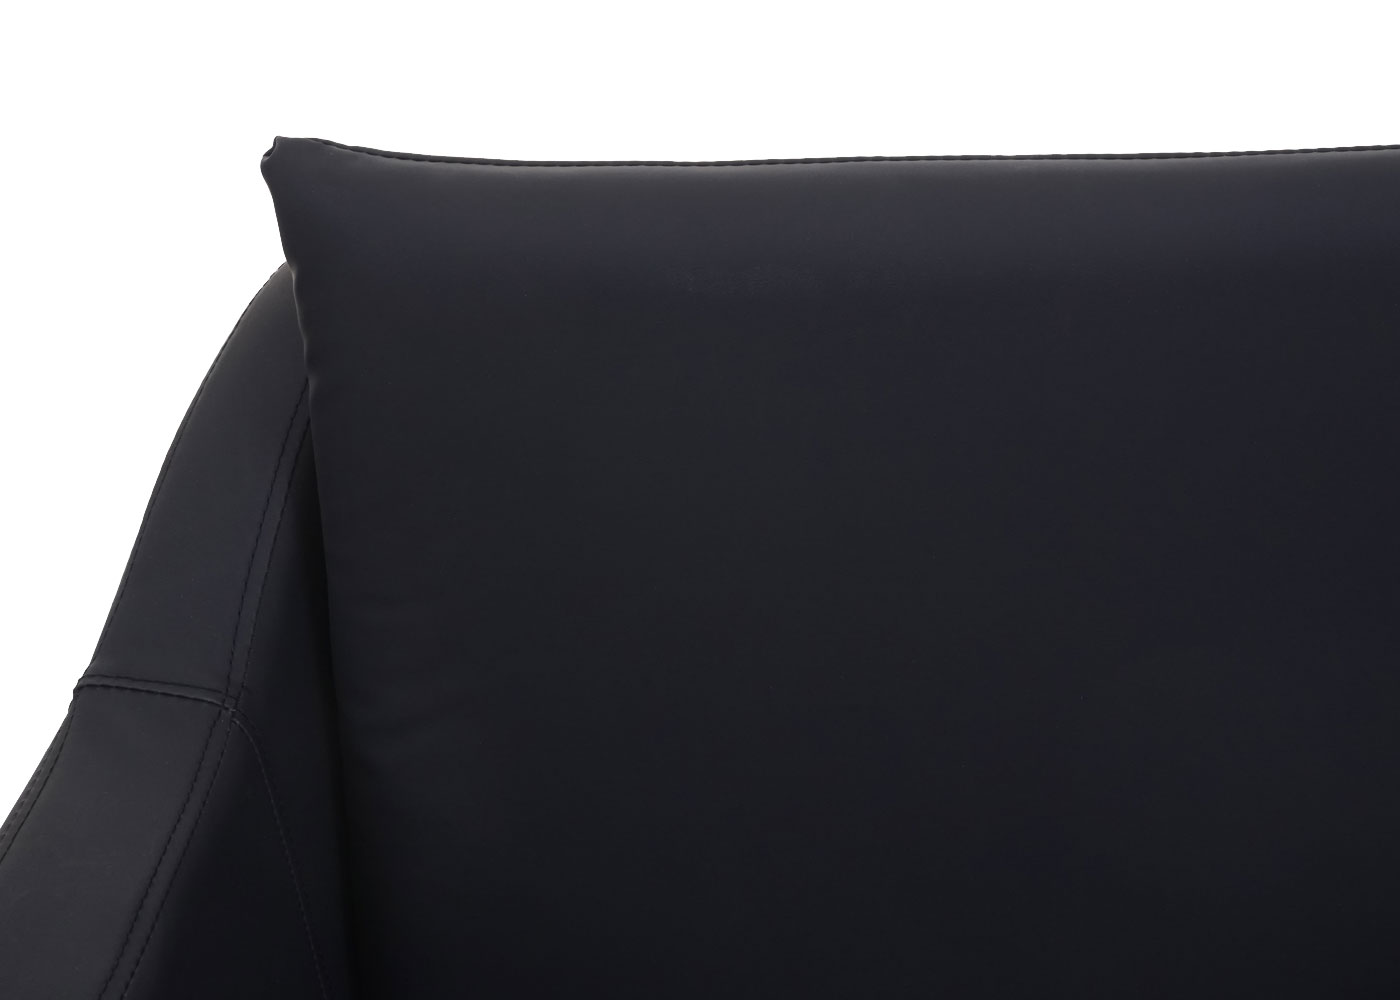 Lounge-Sessel HWC-H93a Detailansicht Rckenlehne